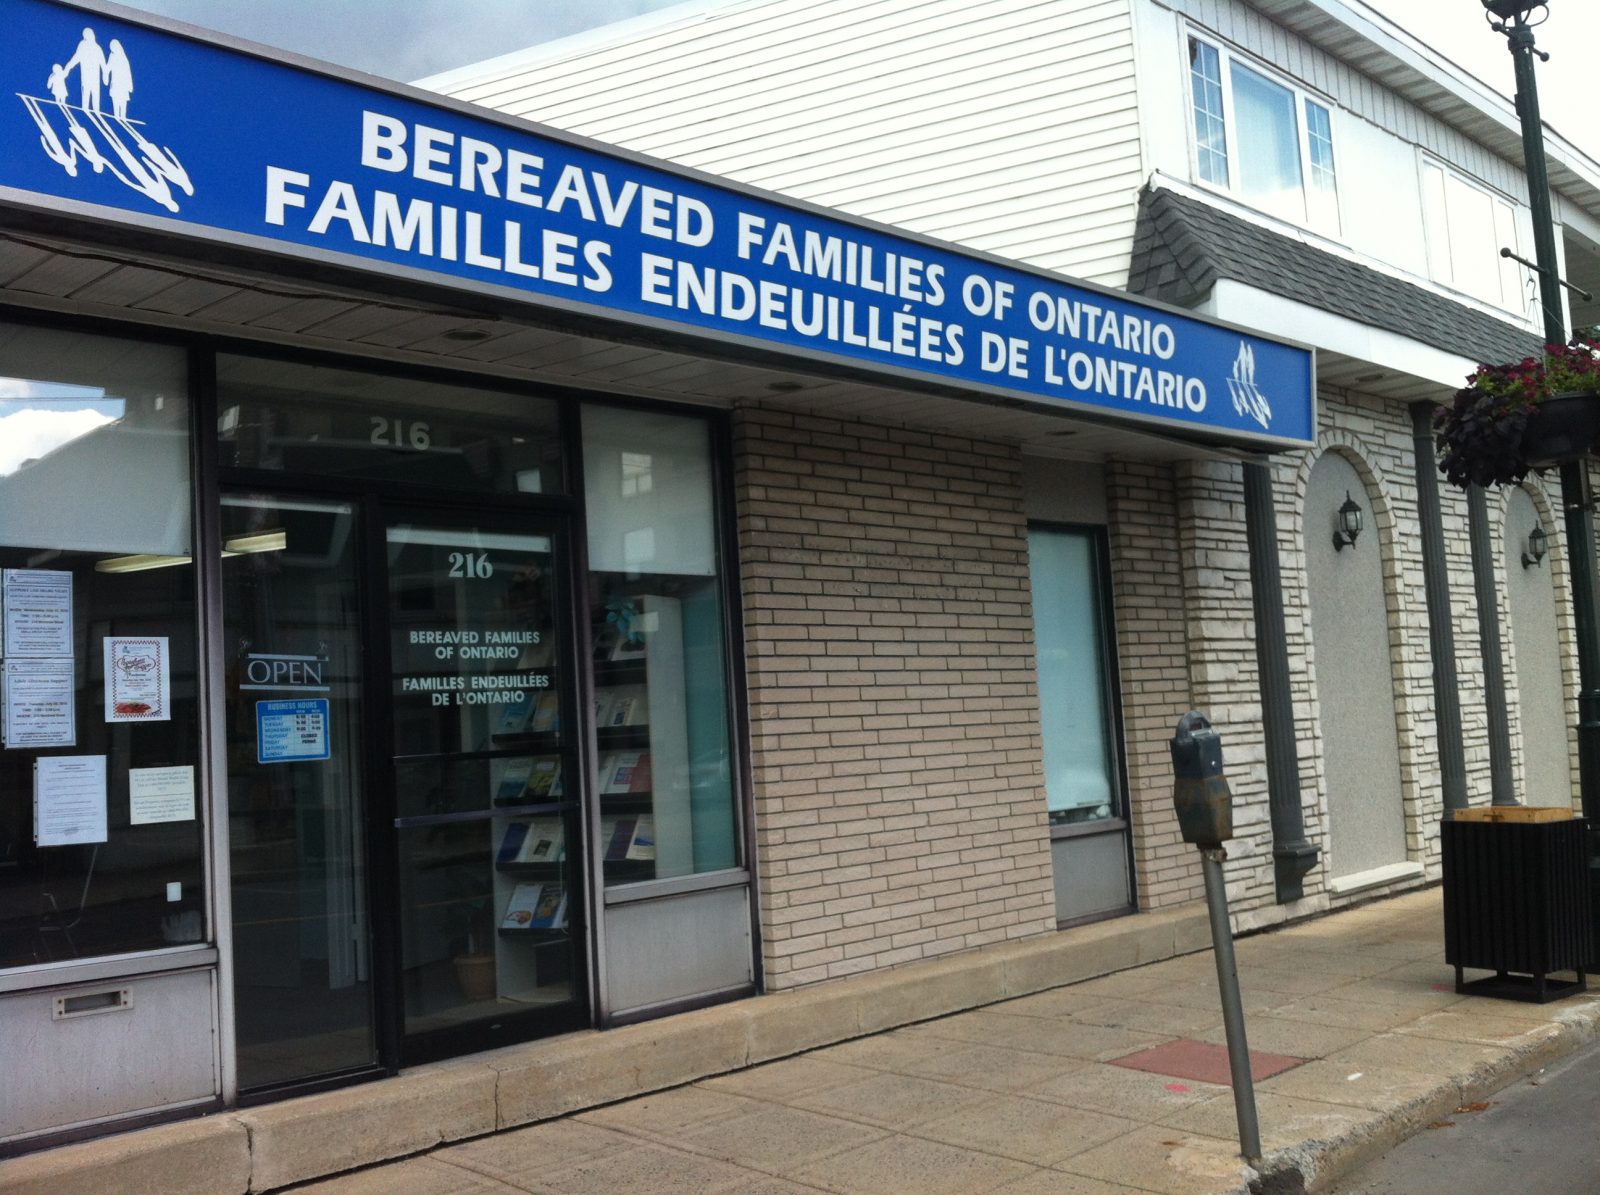 Bereaved Families Cornwall closes